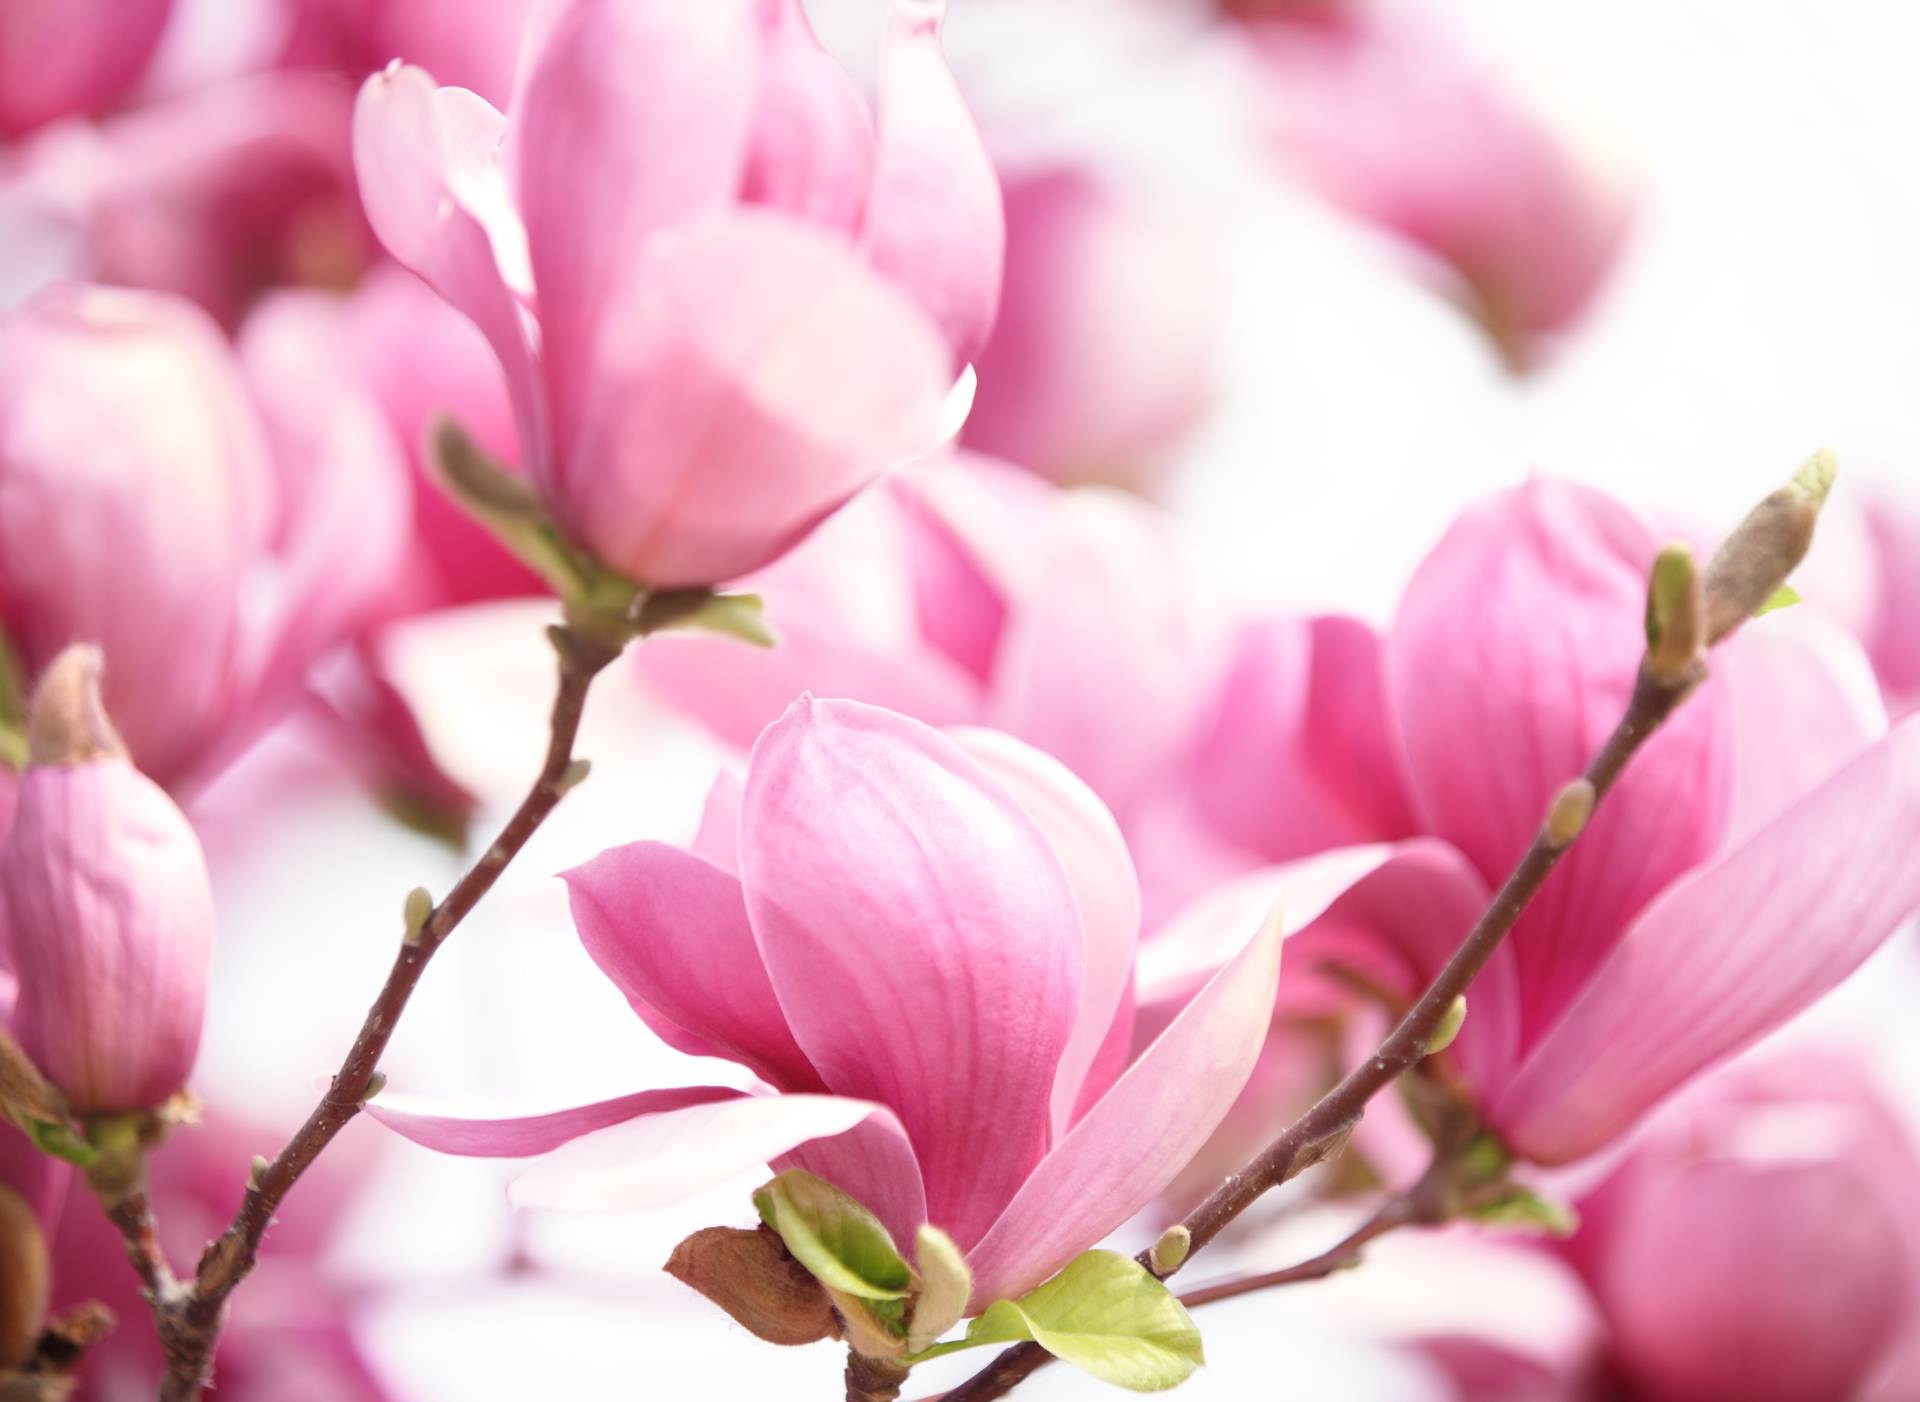 Papermoon Fototapete »Pink Magnolia« von Papermoon